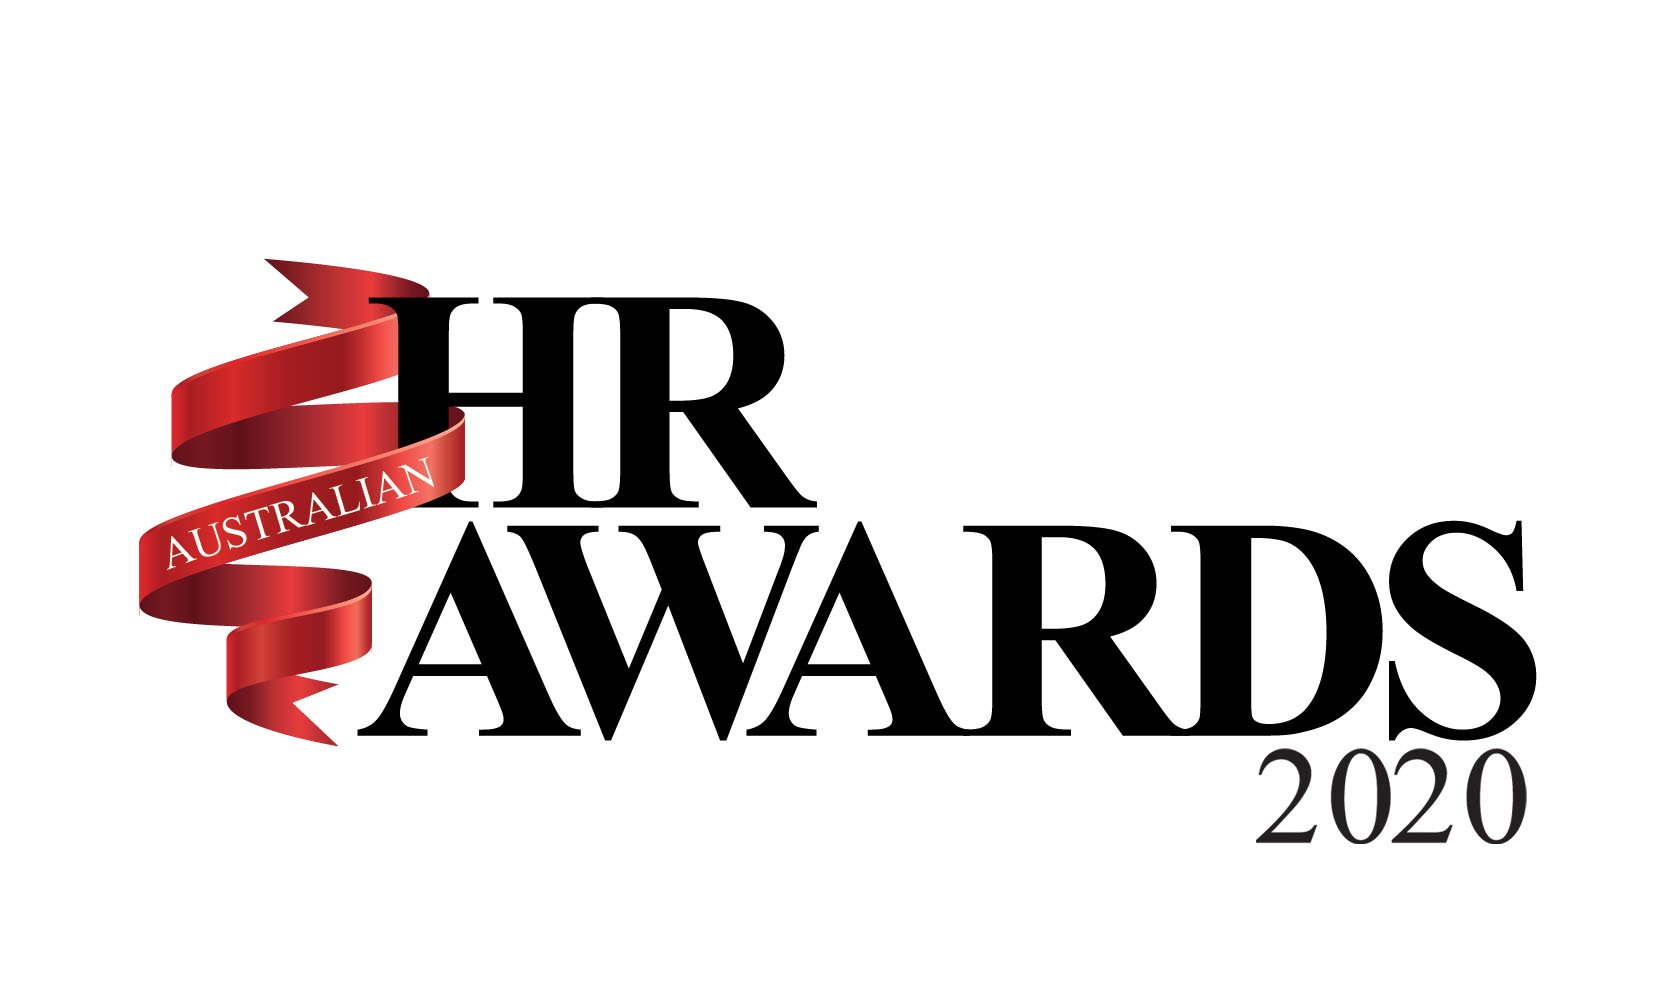 Australian HR Awards 2020: Full list of winners and excellence awardees